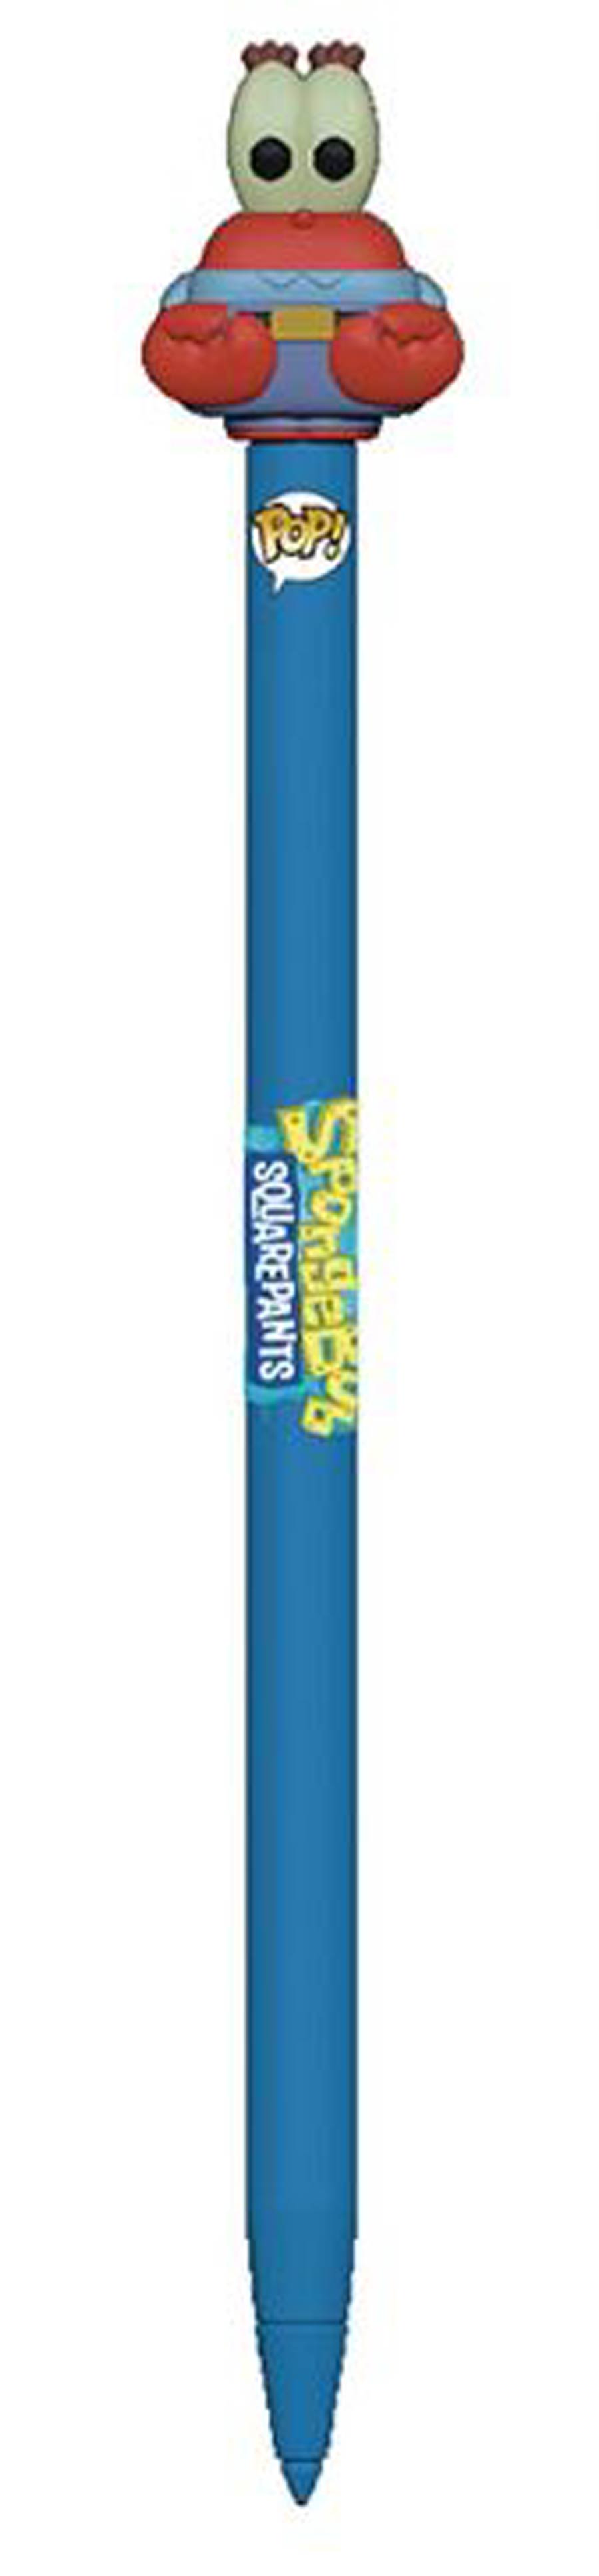 POP SpongeBob SquarePants Pen Topper - Mr. Krabs